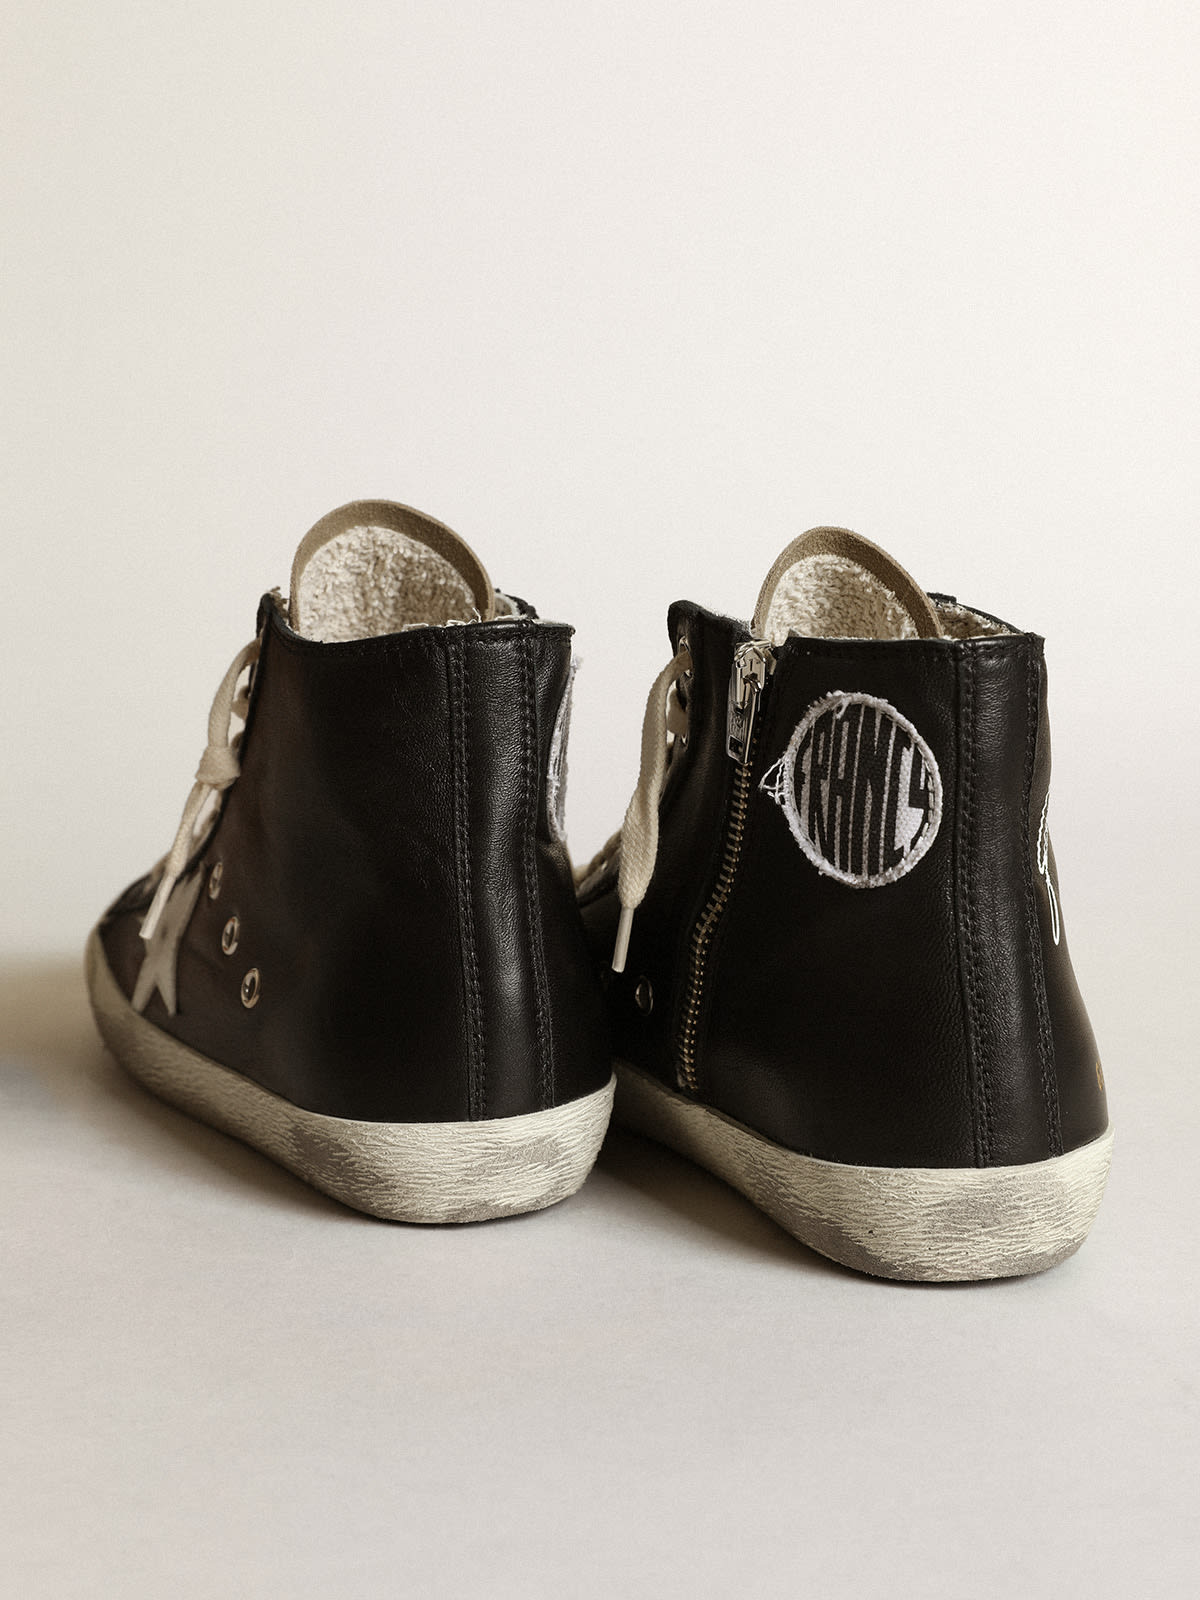 Golden Goose - Sneaker Francy in nappa nera con stella in pelle bianca e linguetta in suede color tortora in 